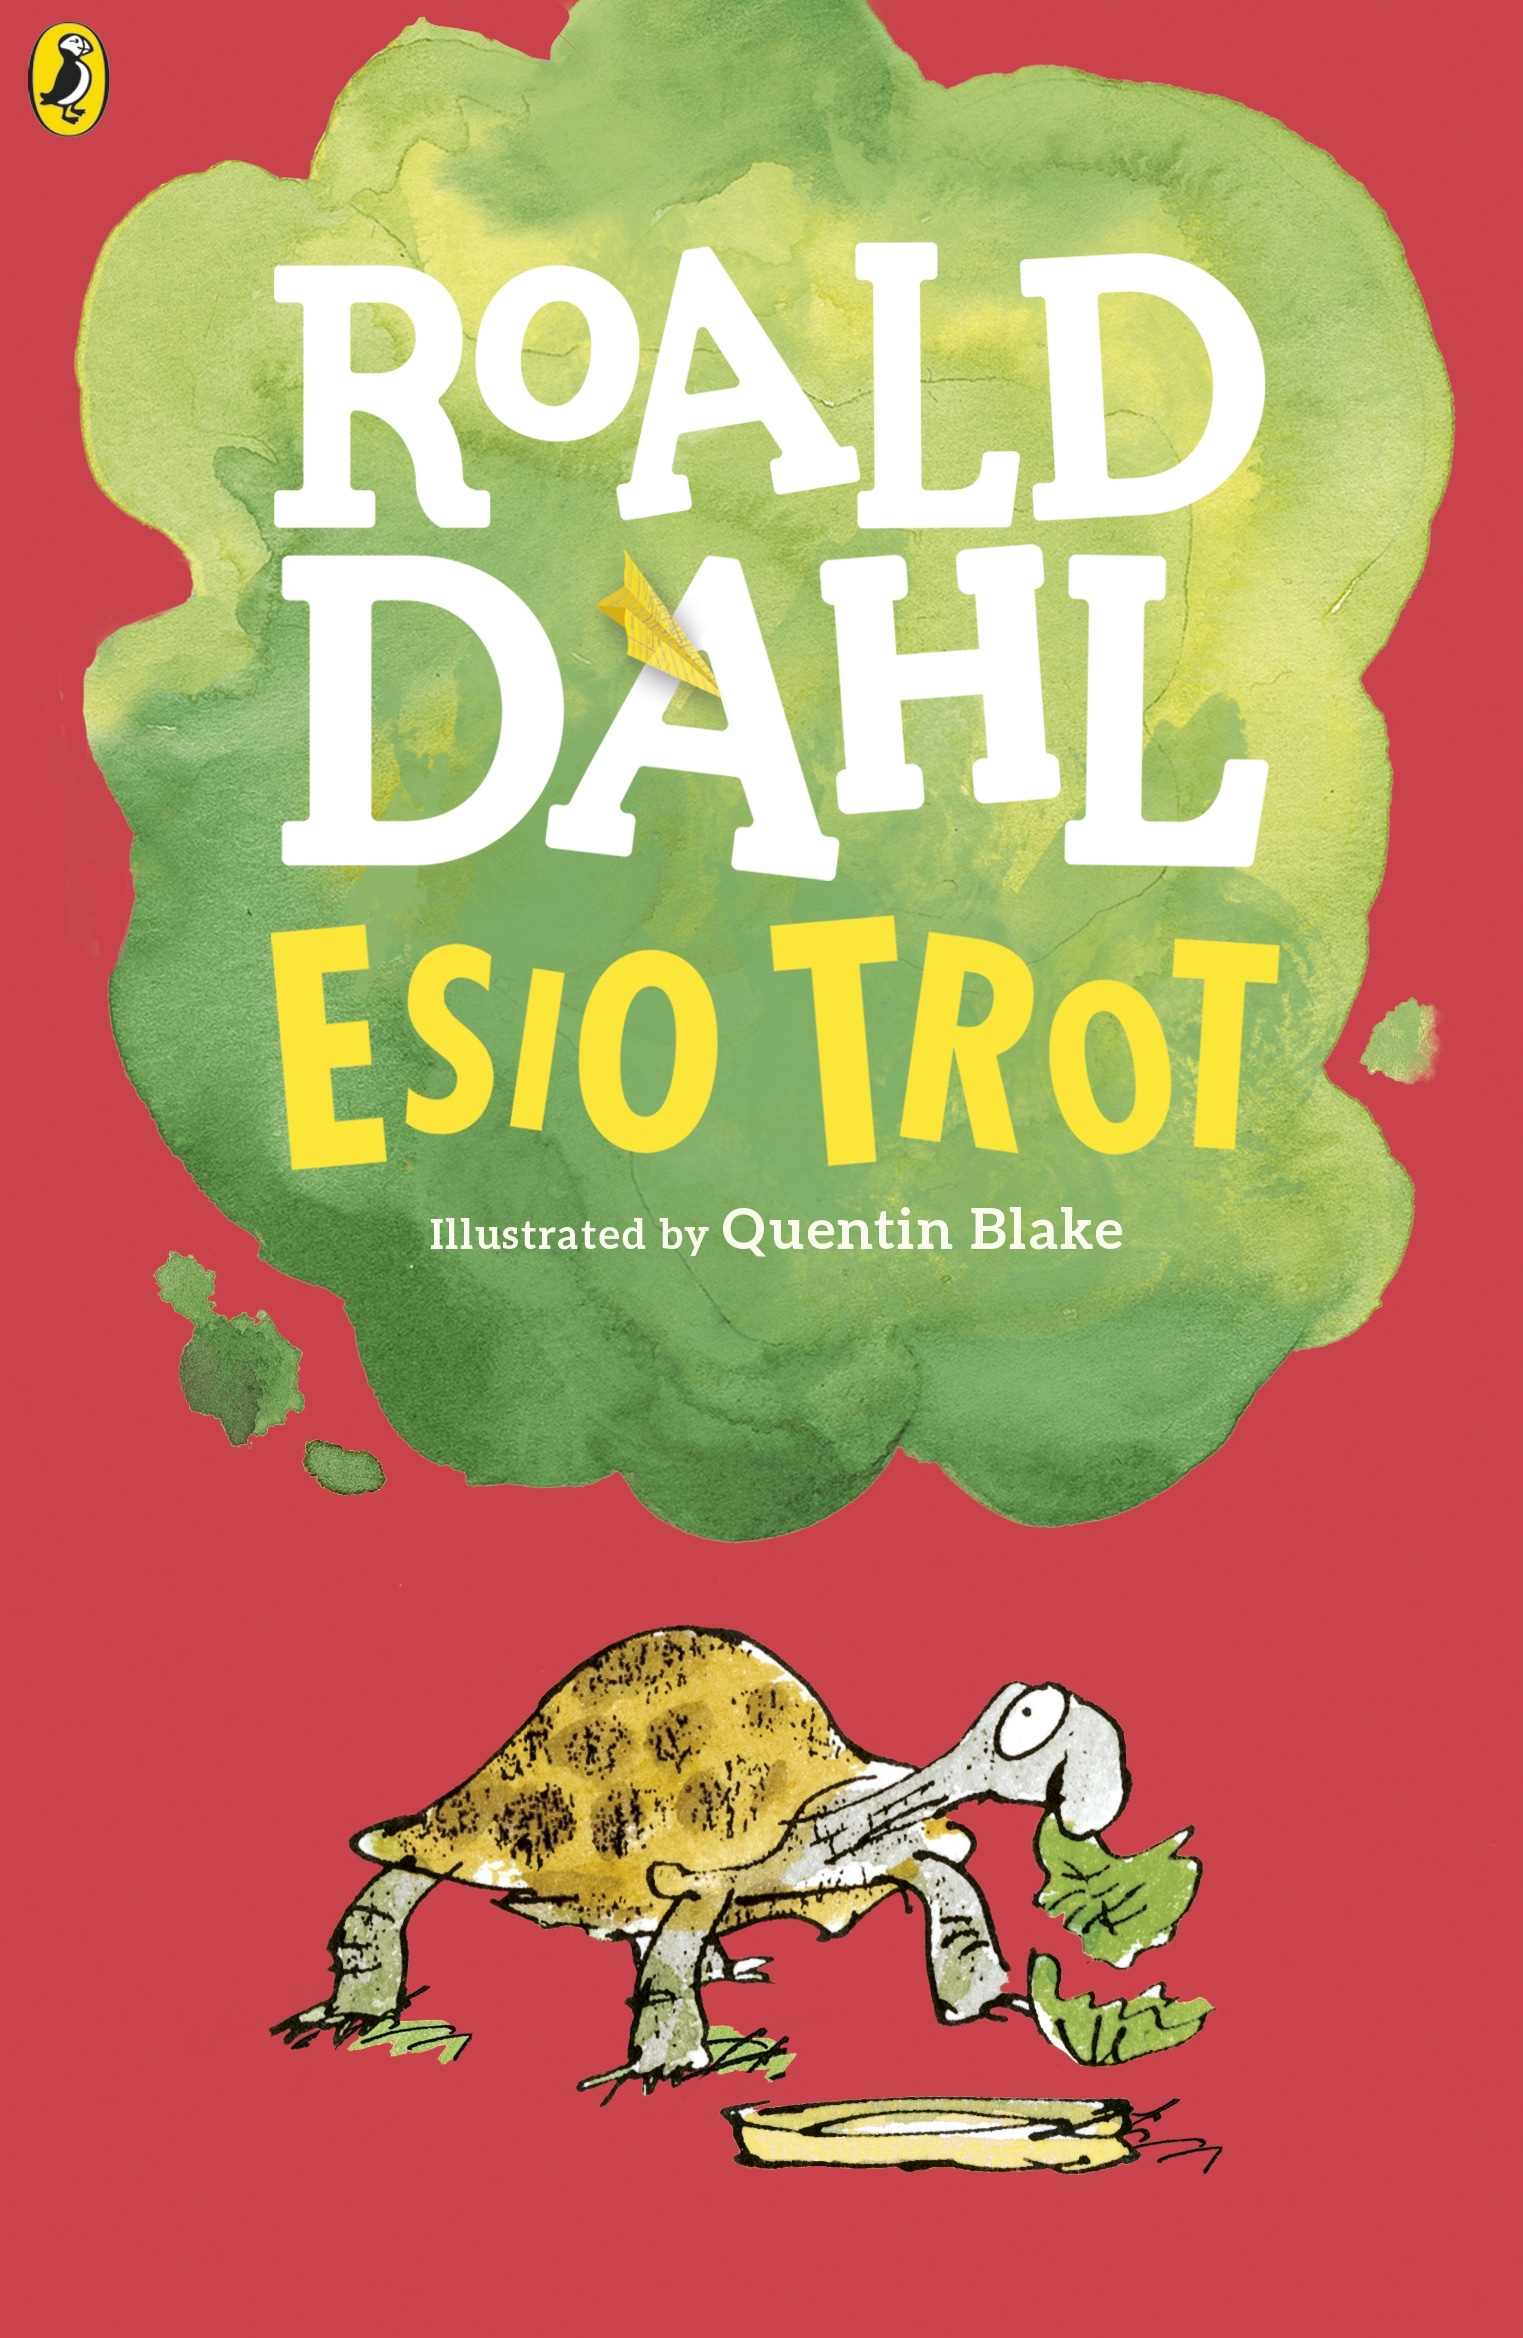 Книга «Esio Trot» Roald Dahl — 11 февраля 2016 г.